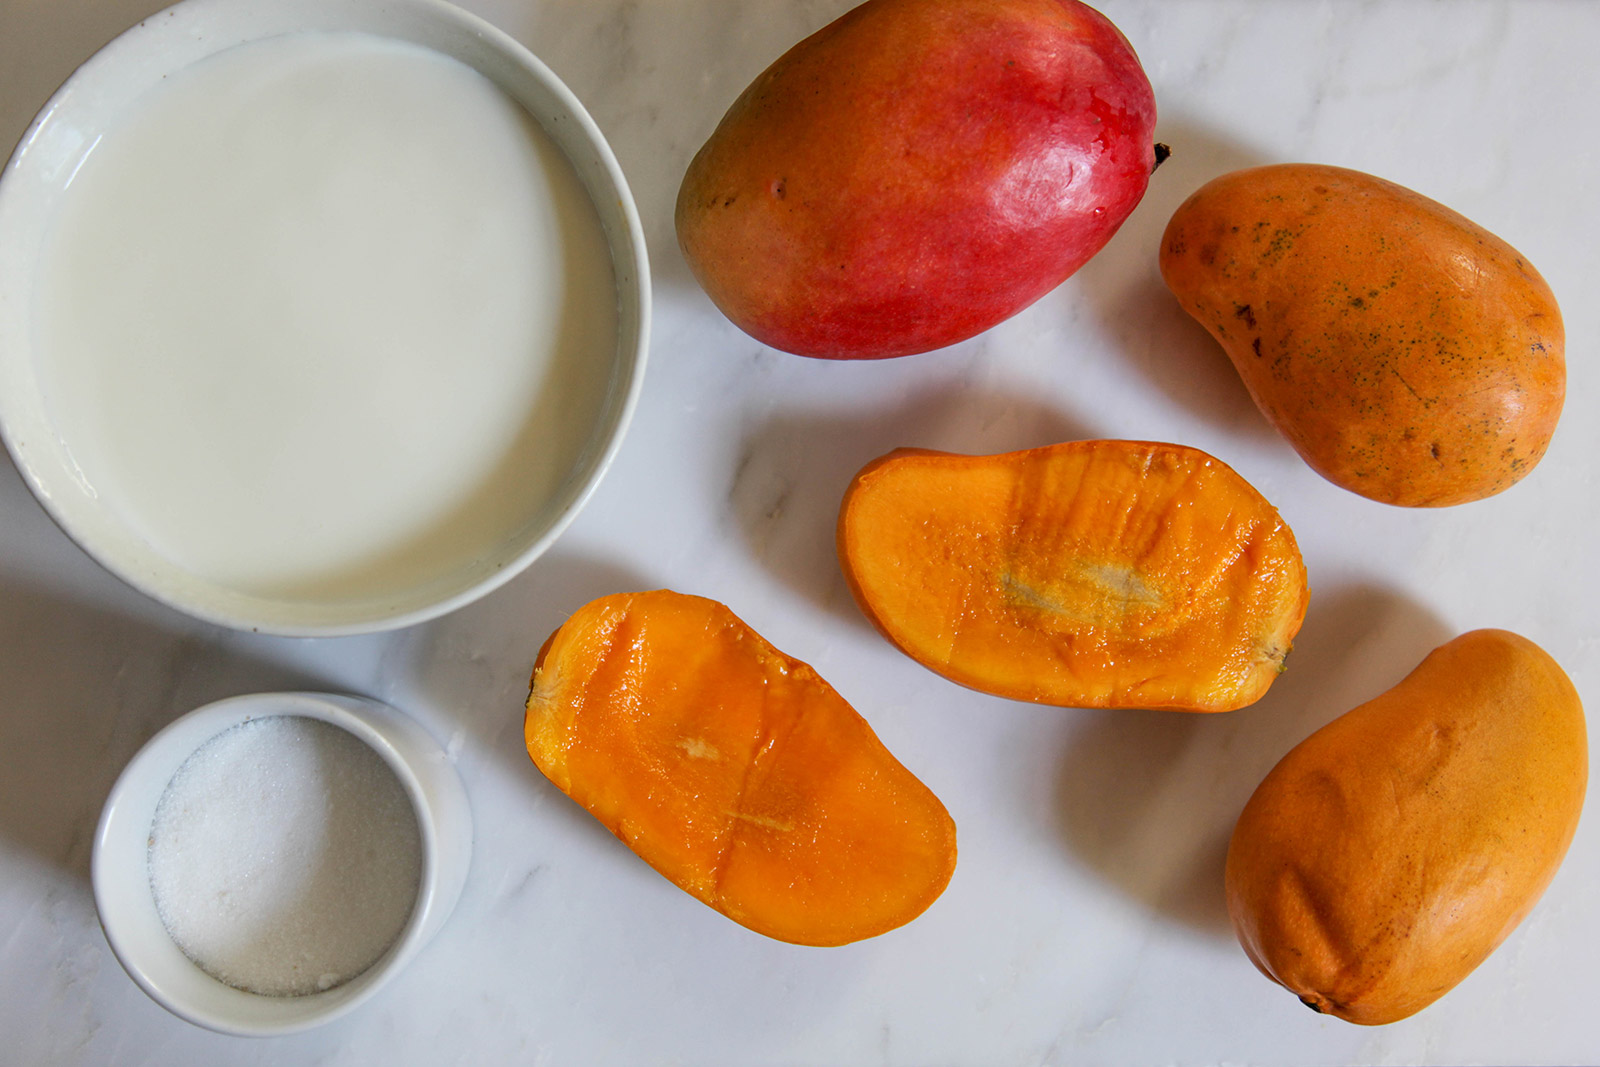 Ingredients for "aamer pona", simple heavenly dessert of sweet mango in creamy milk dessert of sweet mango in creamy milk